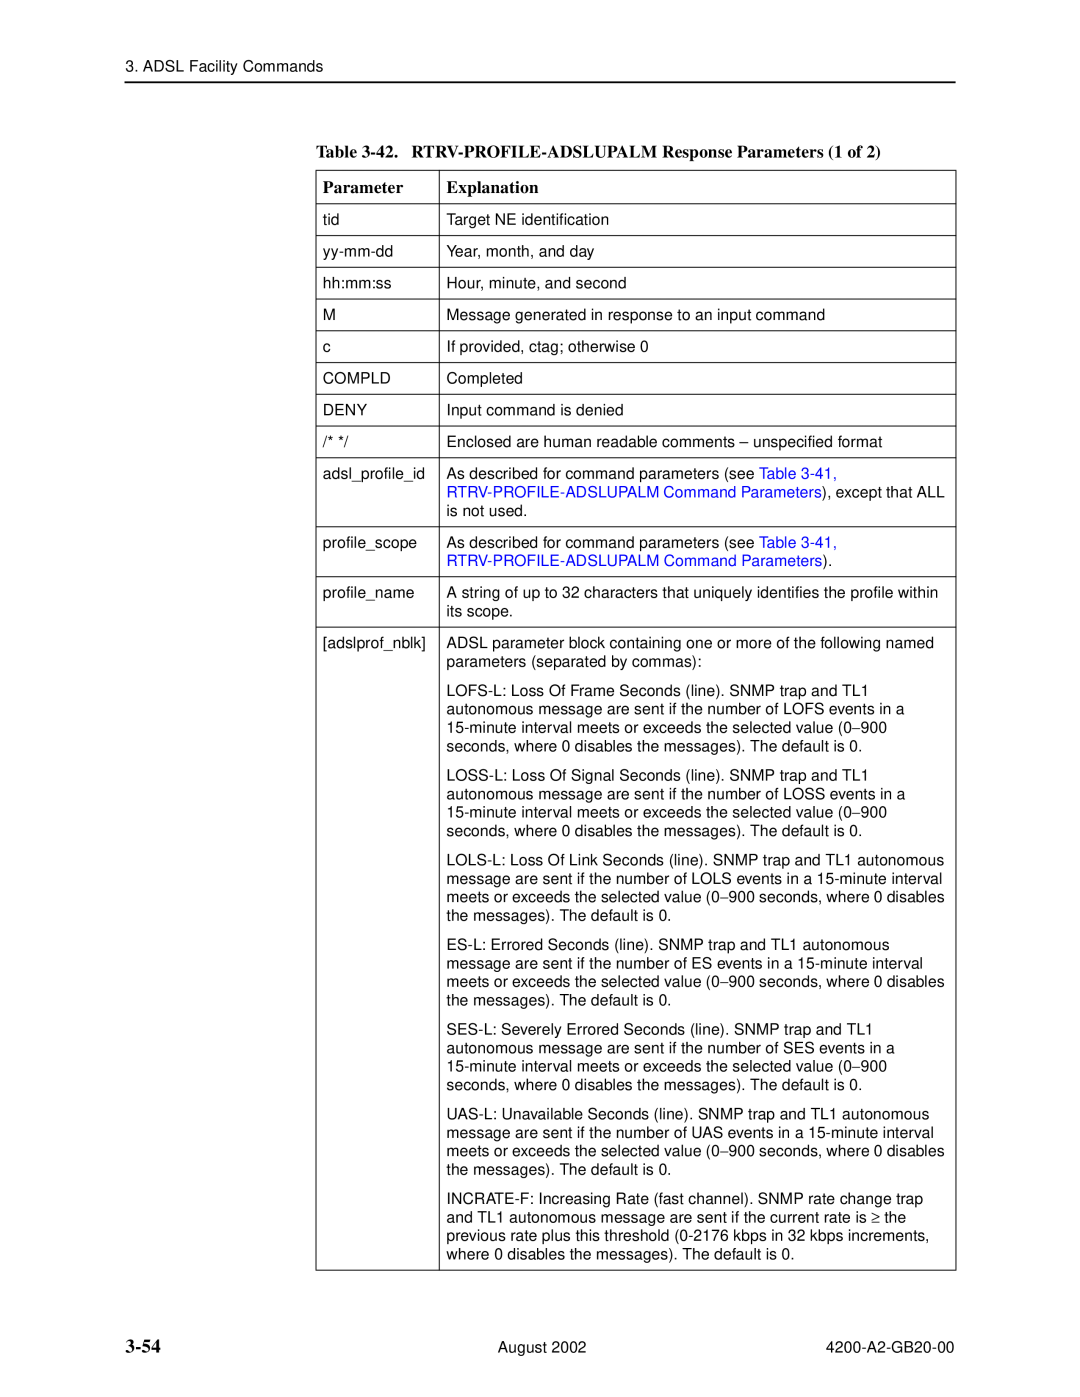 Paradyne 4200 manual 3-54, 42. RTRV-PROFILE-ADSLUPALM Response Parameters 1 of, Explanation 